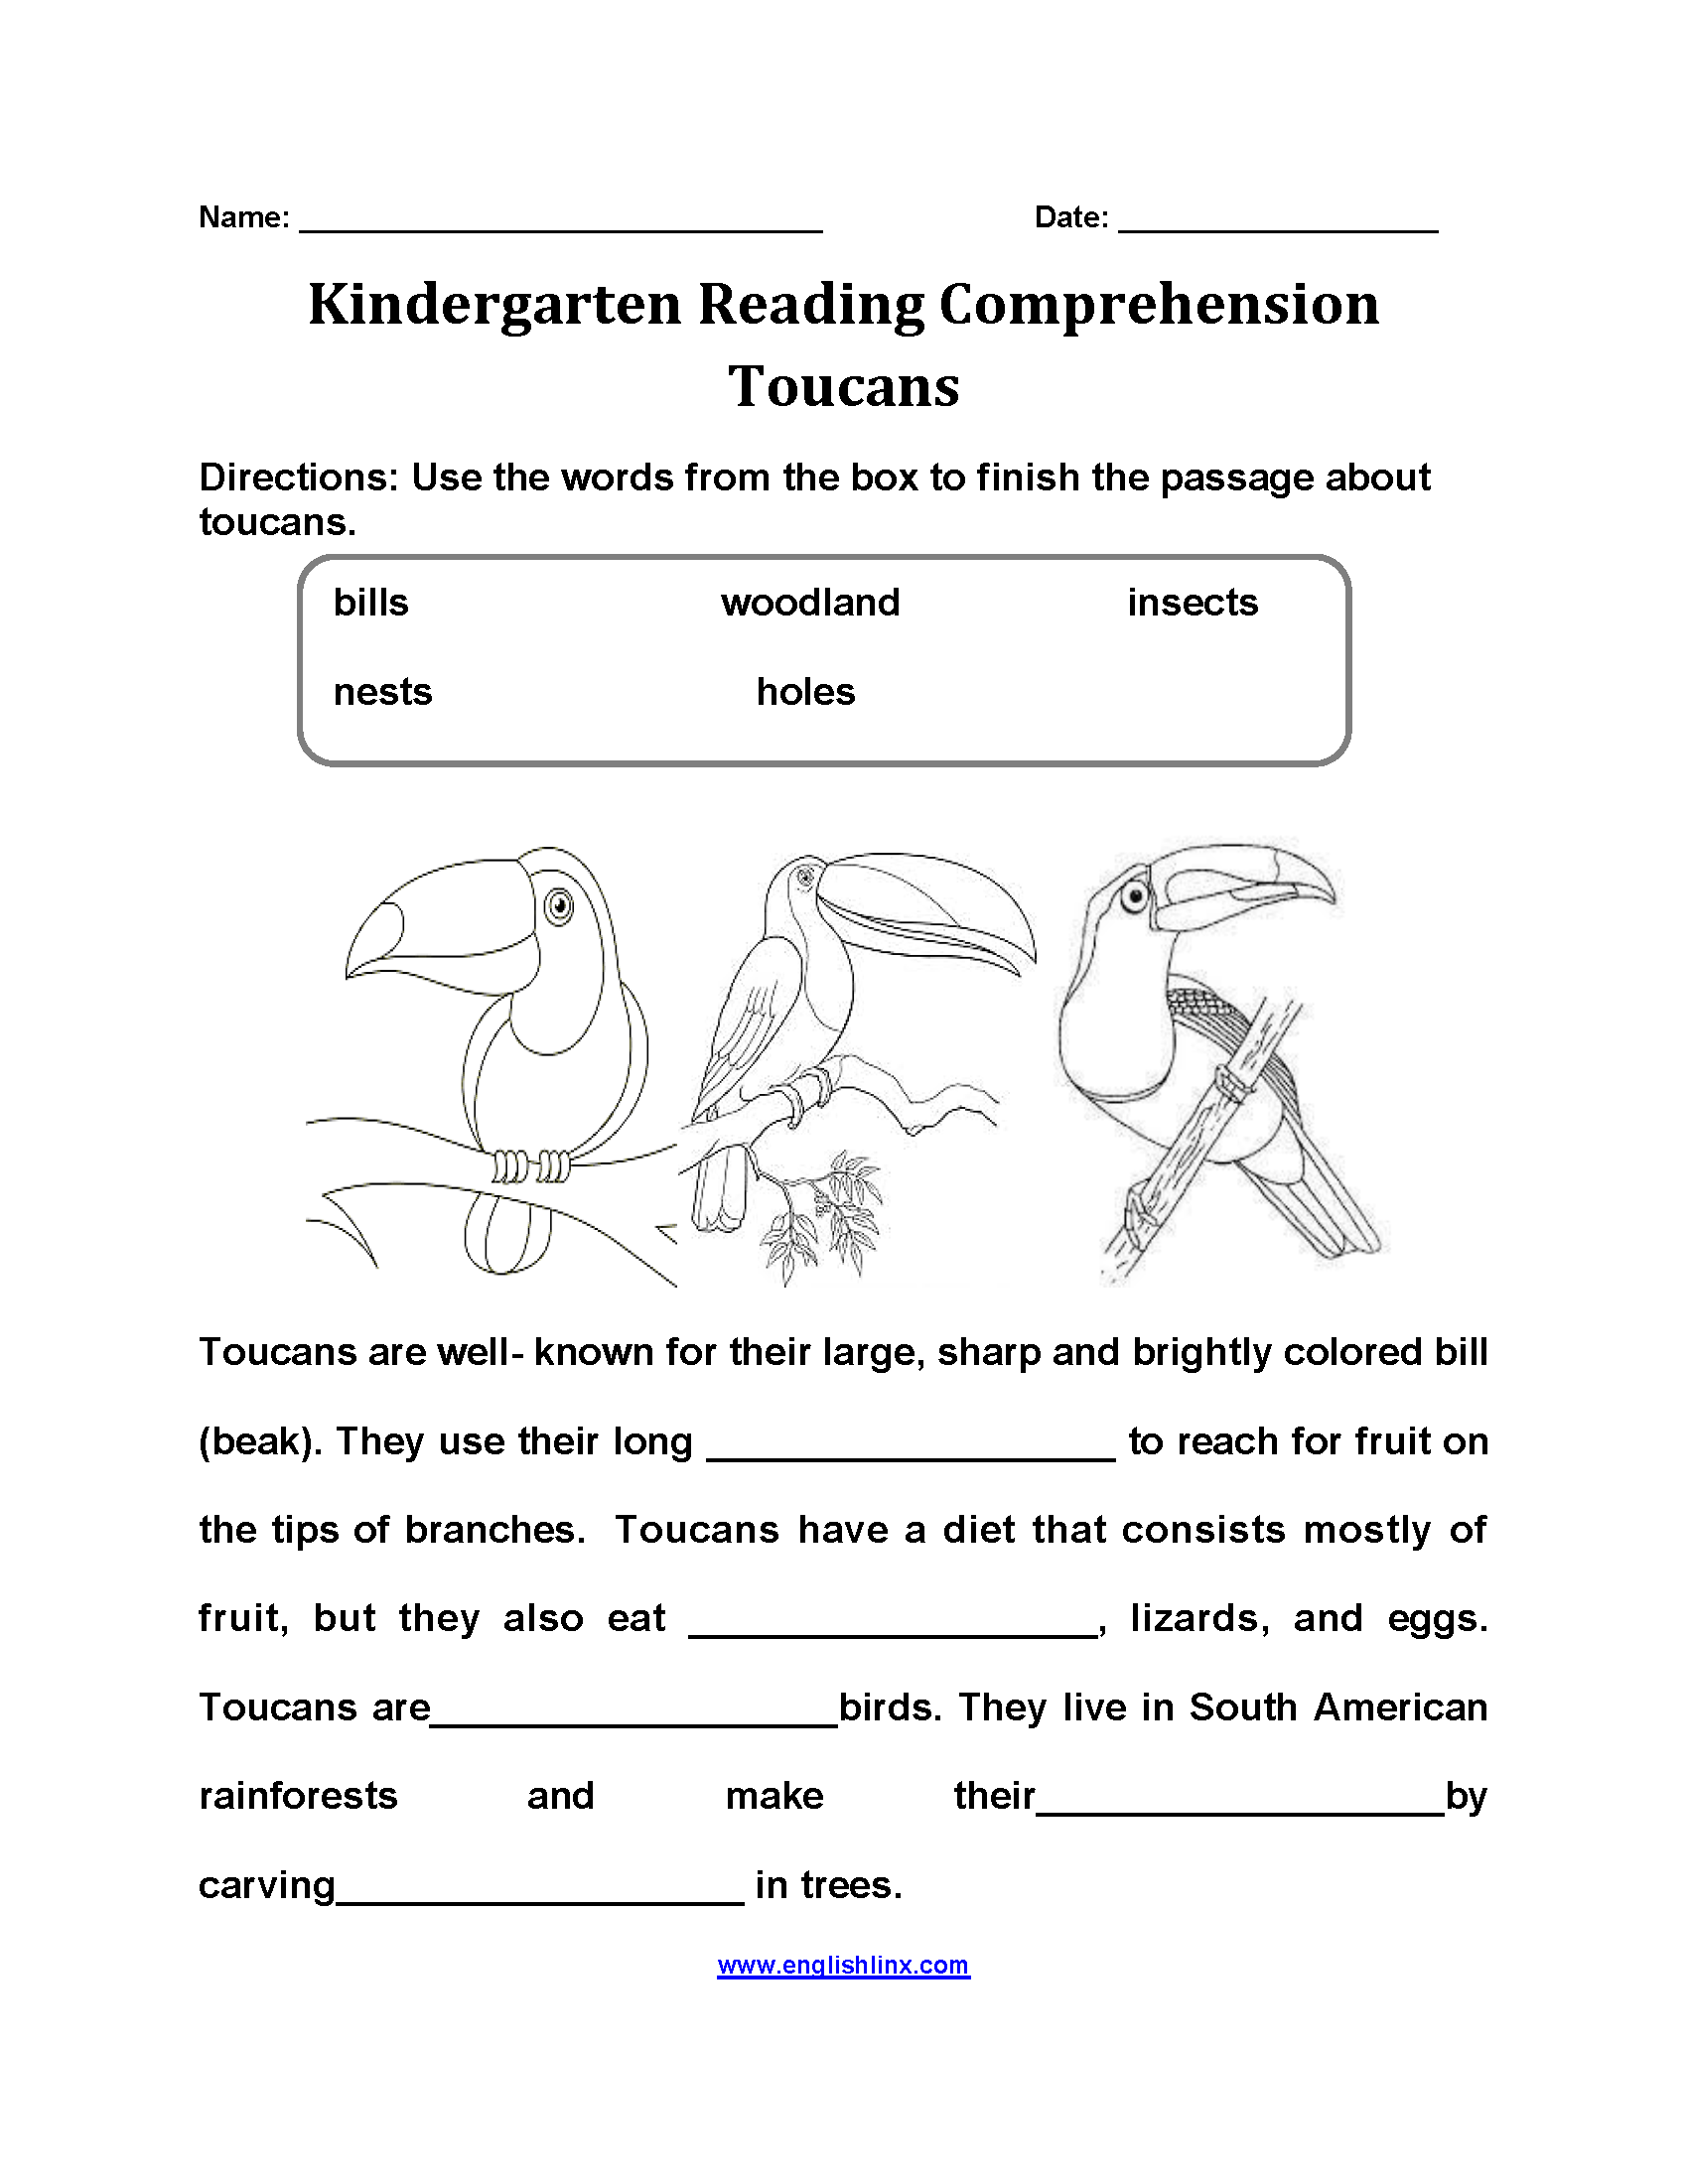 Toucans Kindergarten Reading Comprehension Worksheets